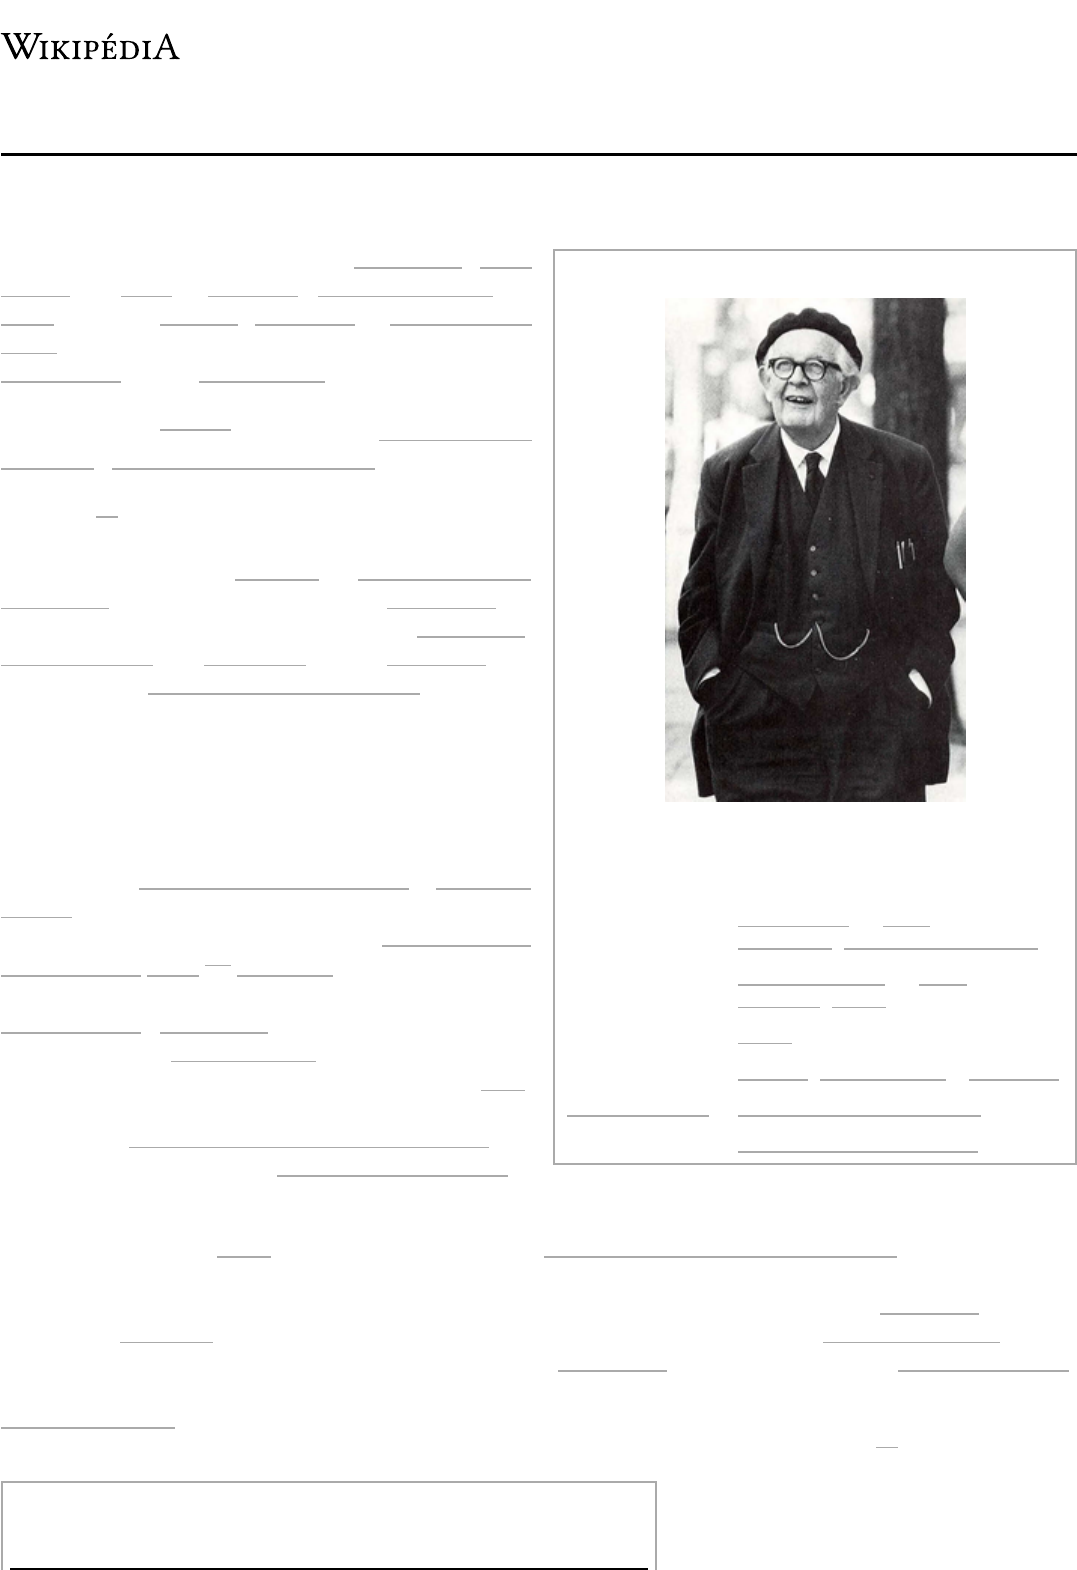 Jean Piaget – Wikipédia, a enciclopédia livre